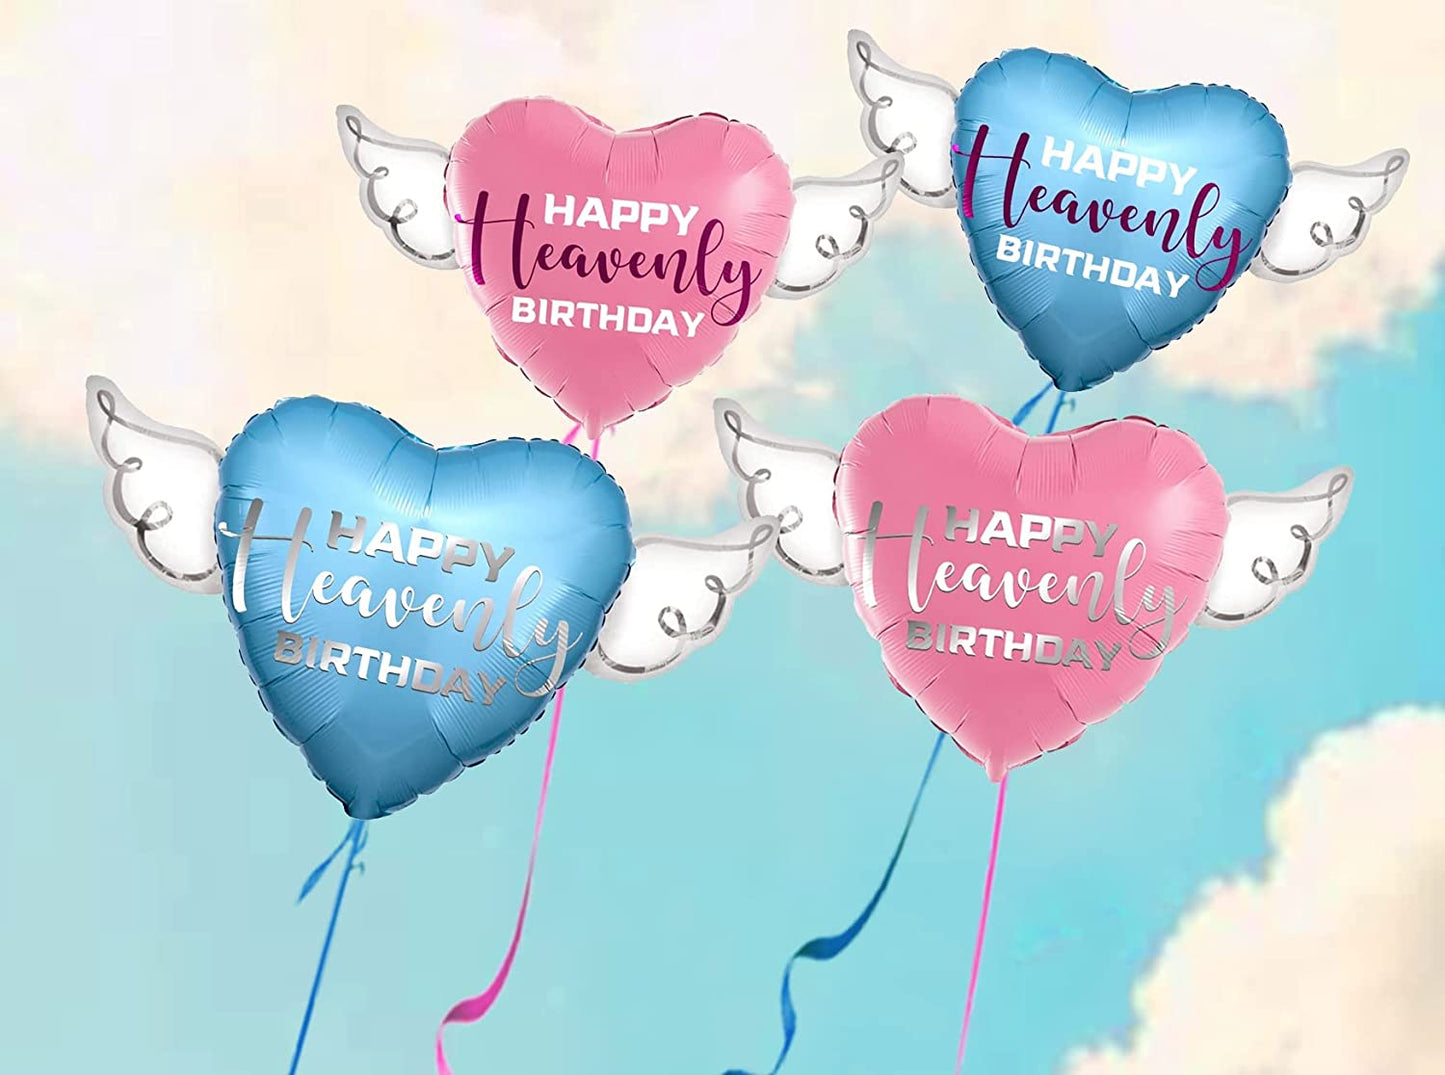 Happy Heavenly Birthday Balloons cover